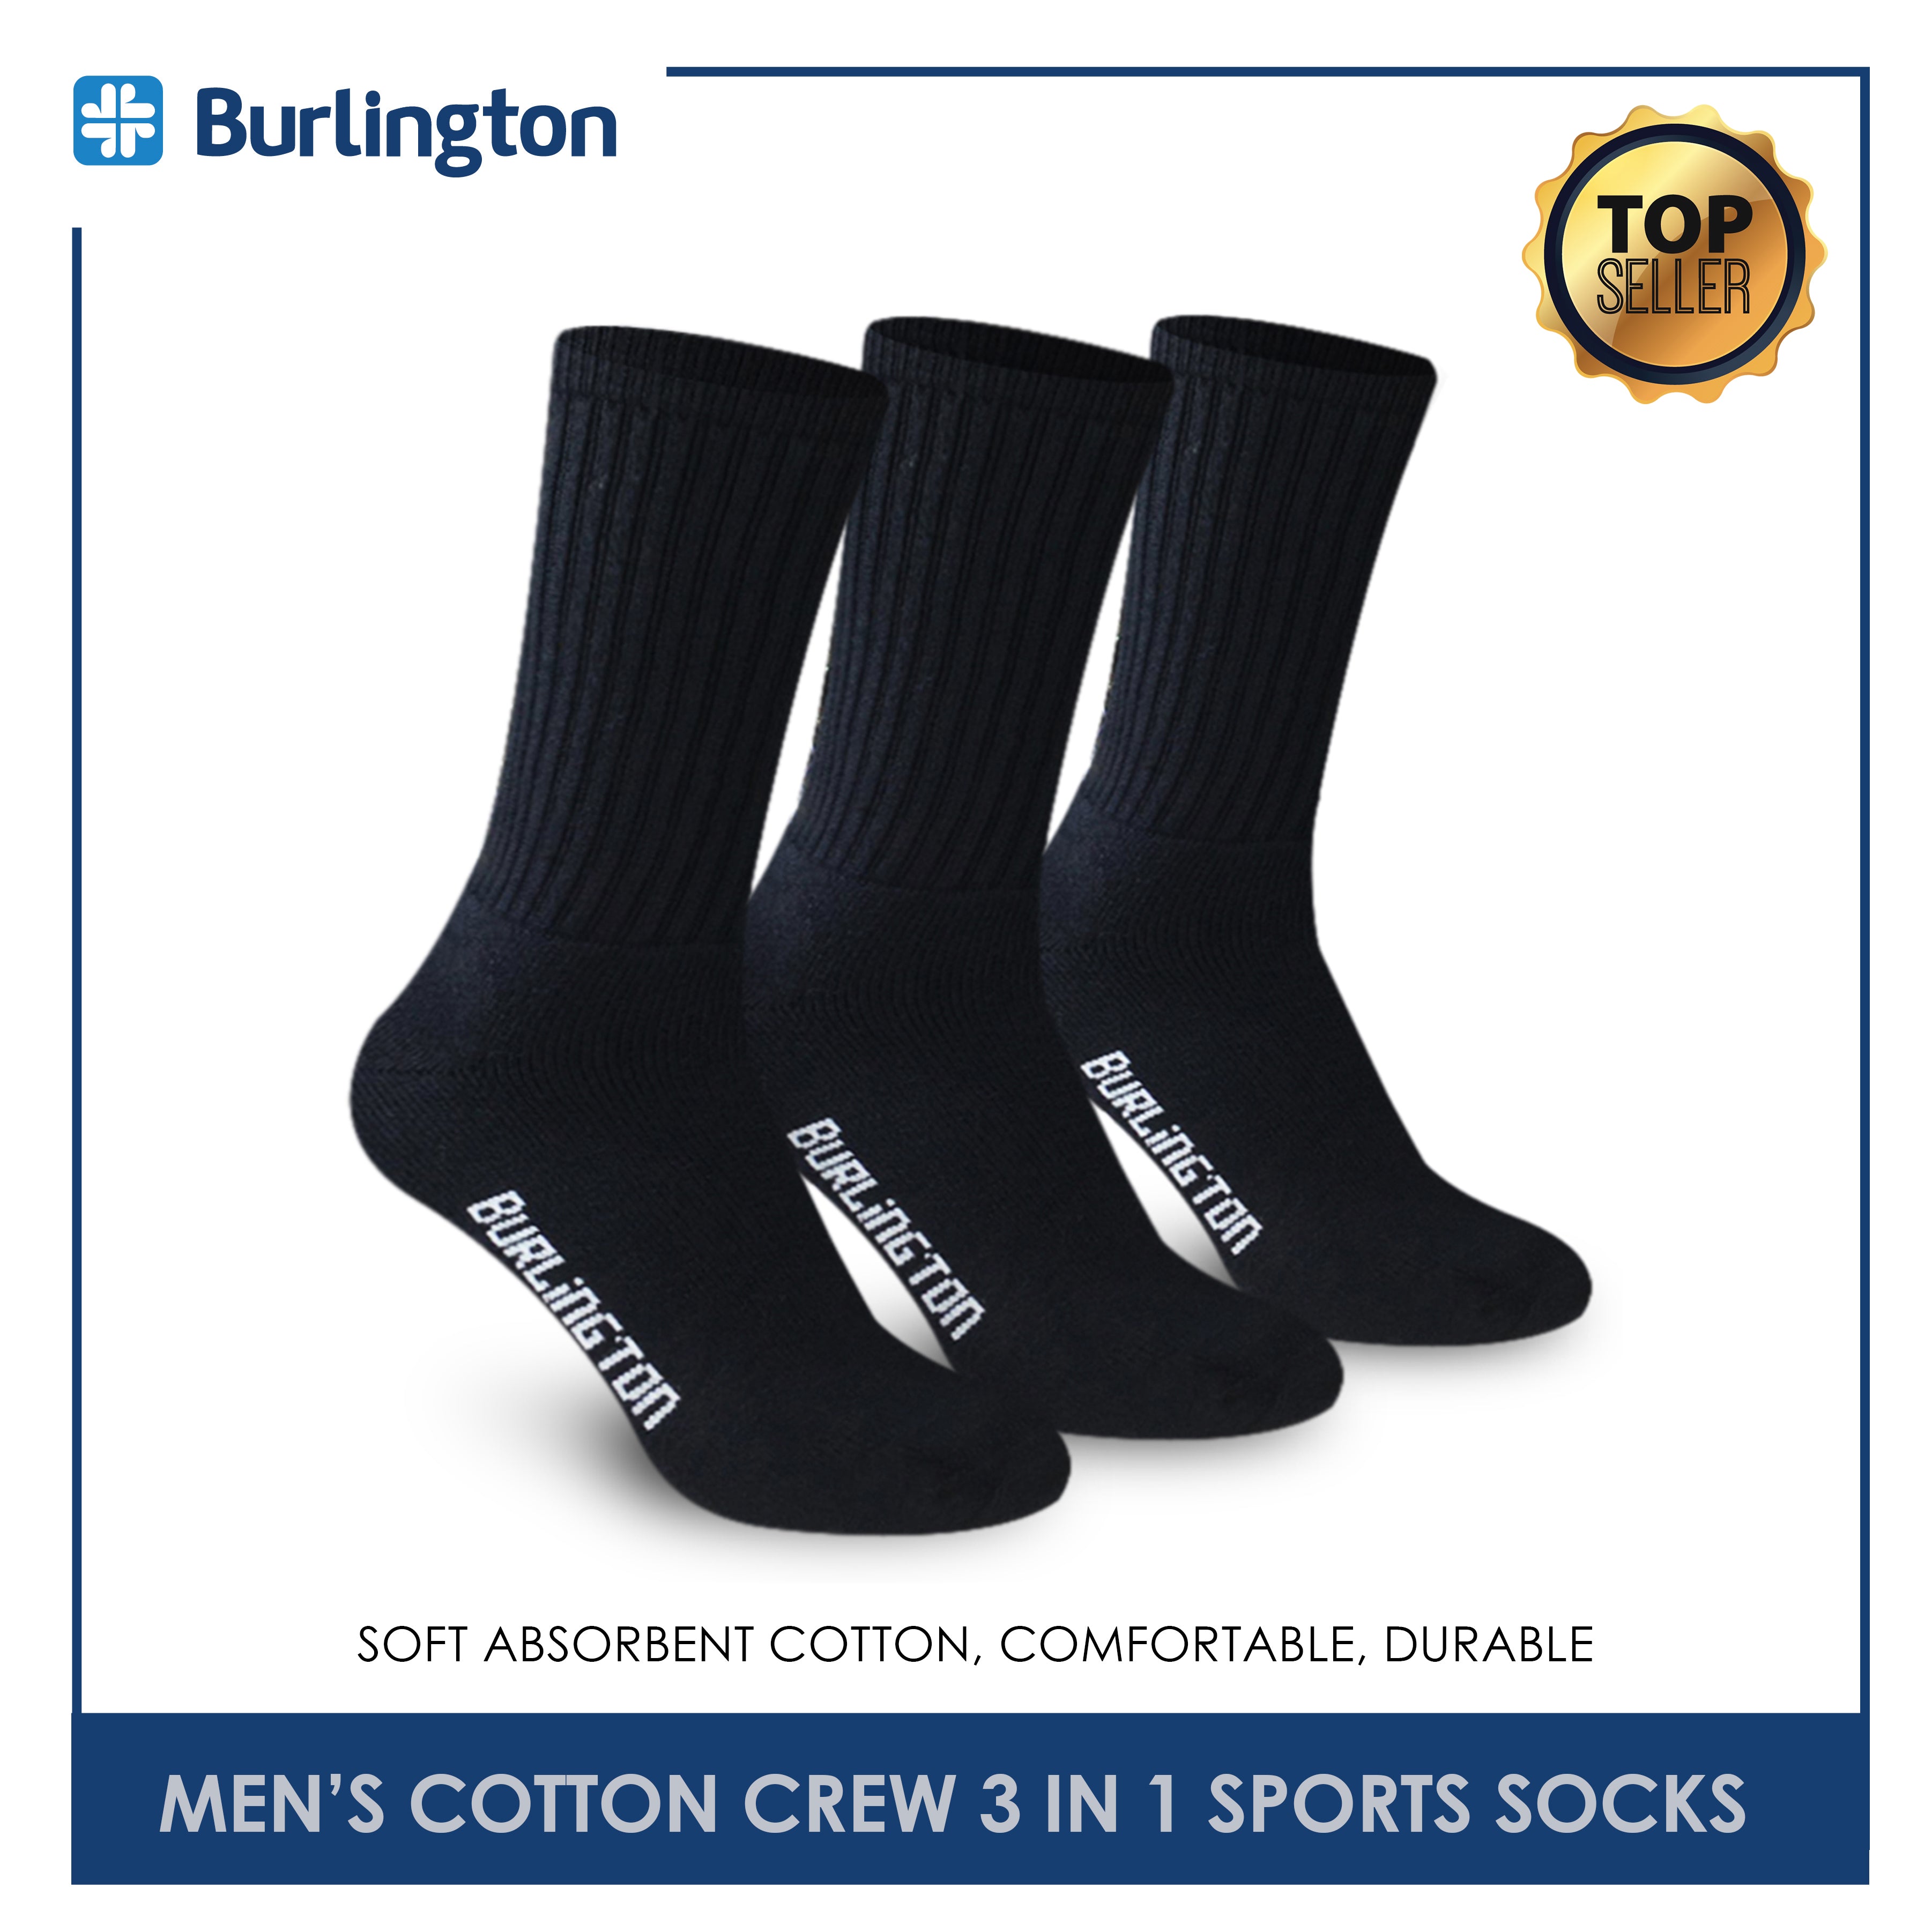 BIOAUM Men's Athletic Socks Size 10-13 - 6 Pairs Cotton Cushioned